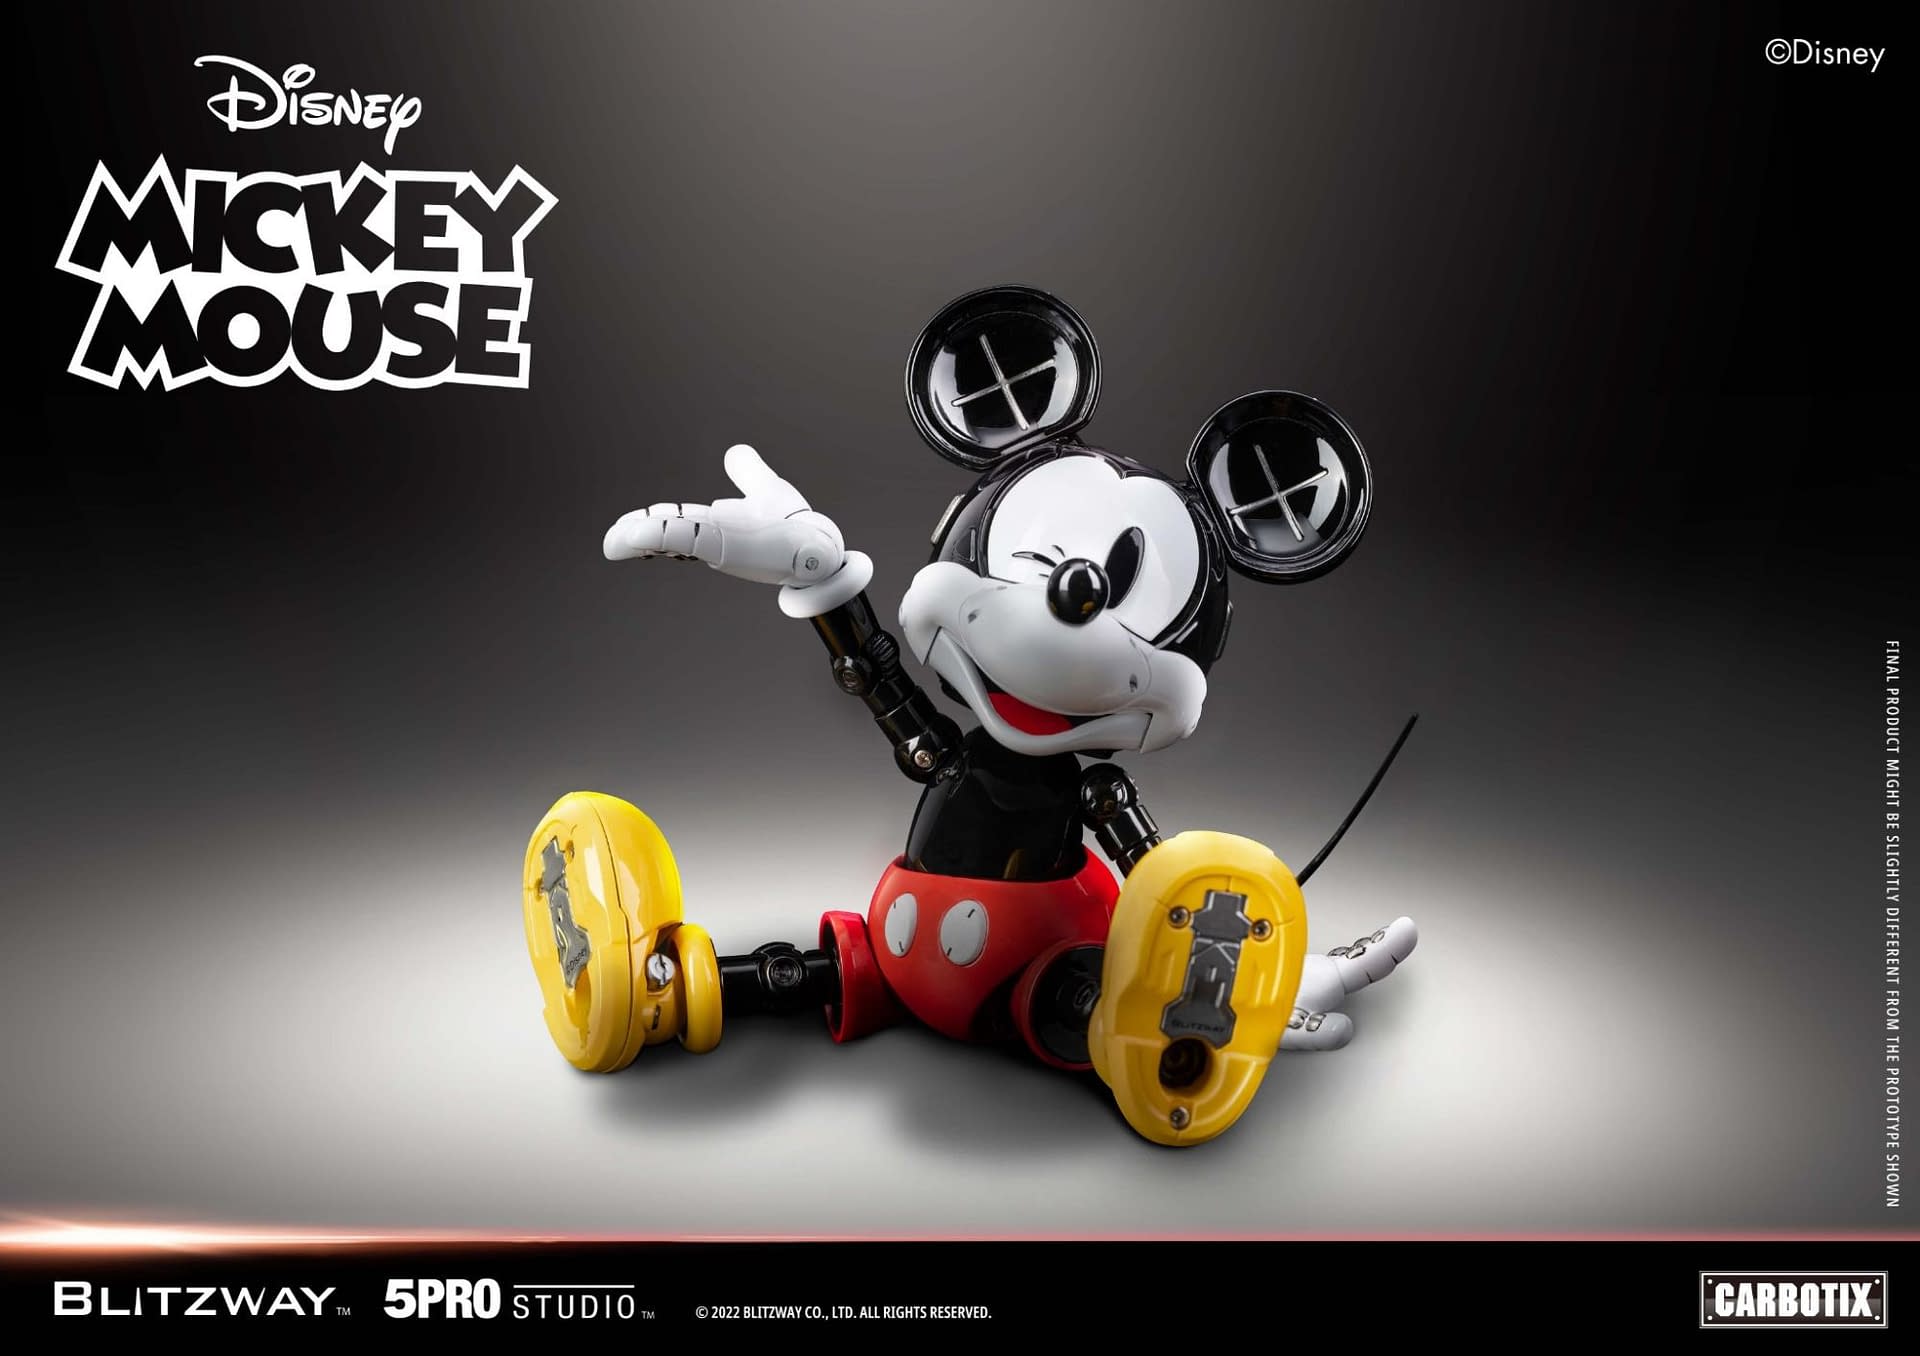 Disney Characters Go Robotic with Blitzway's New Carbotix Figures 